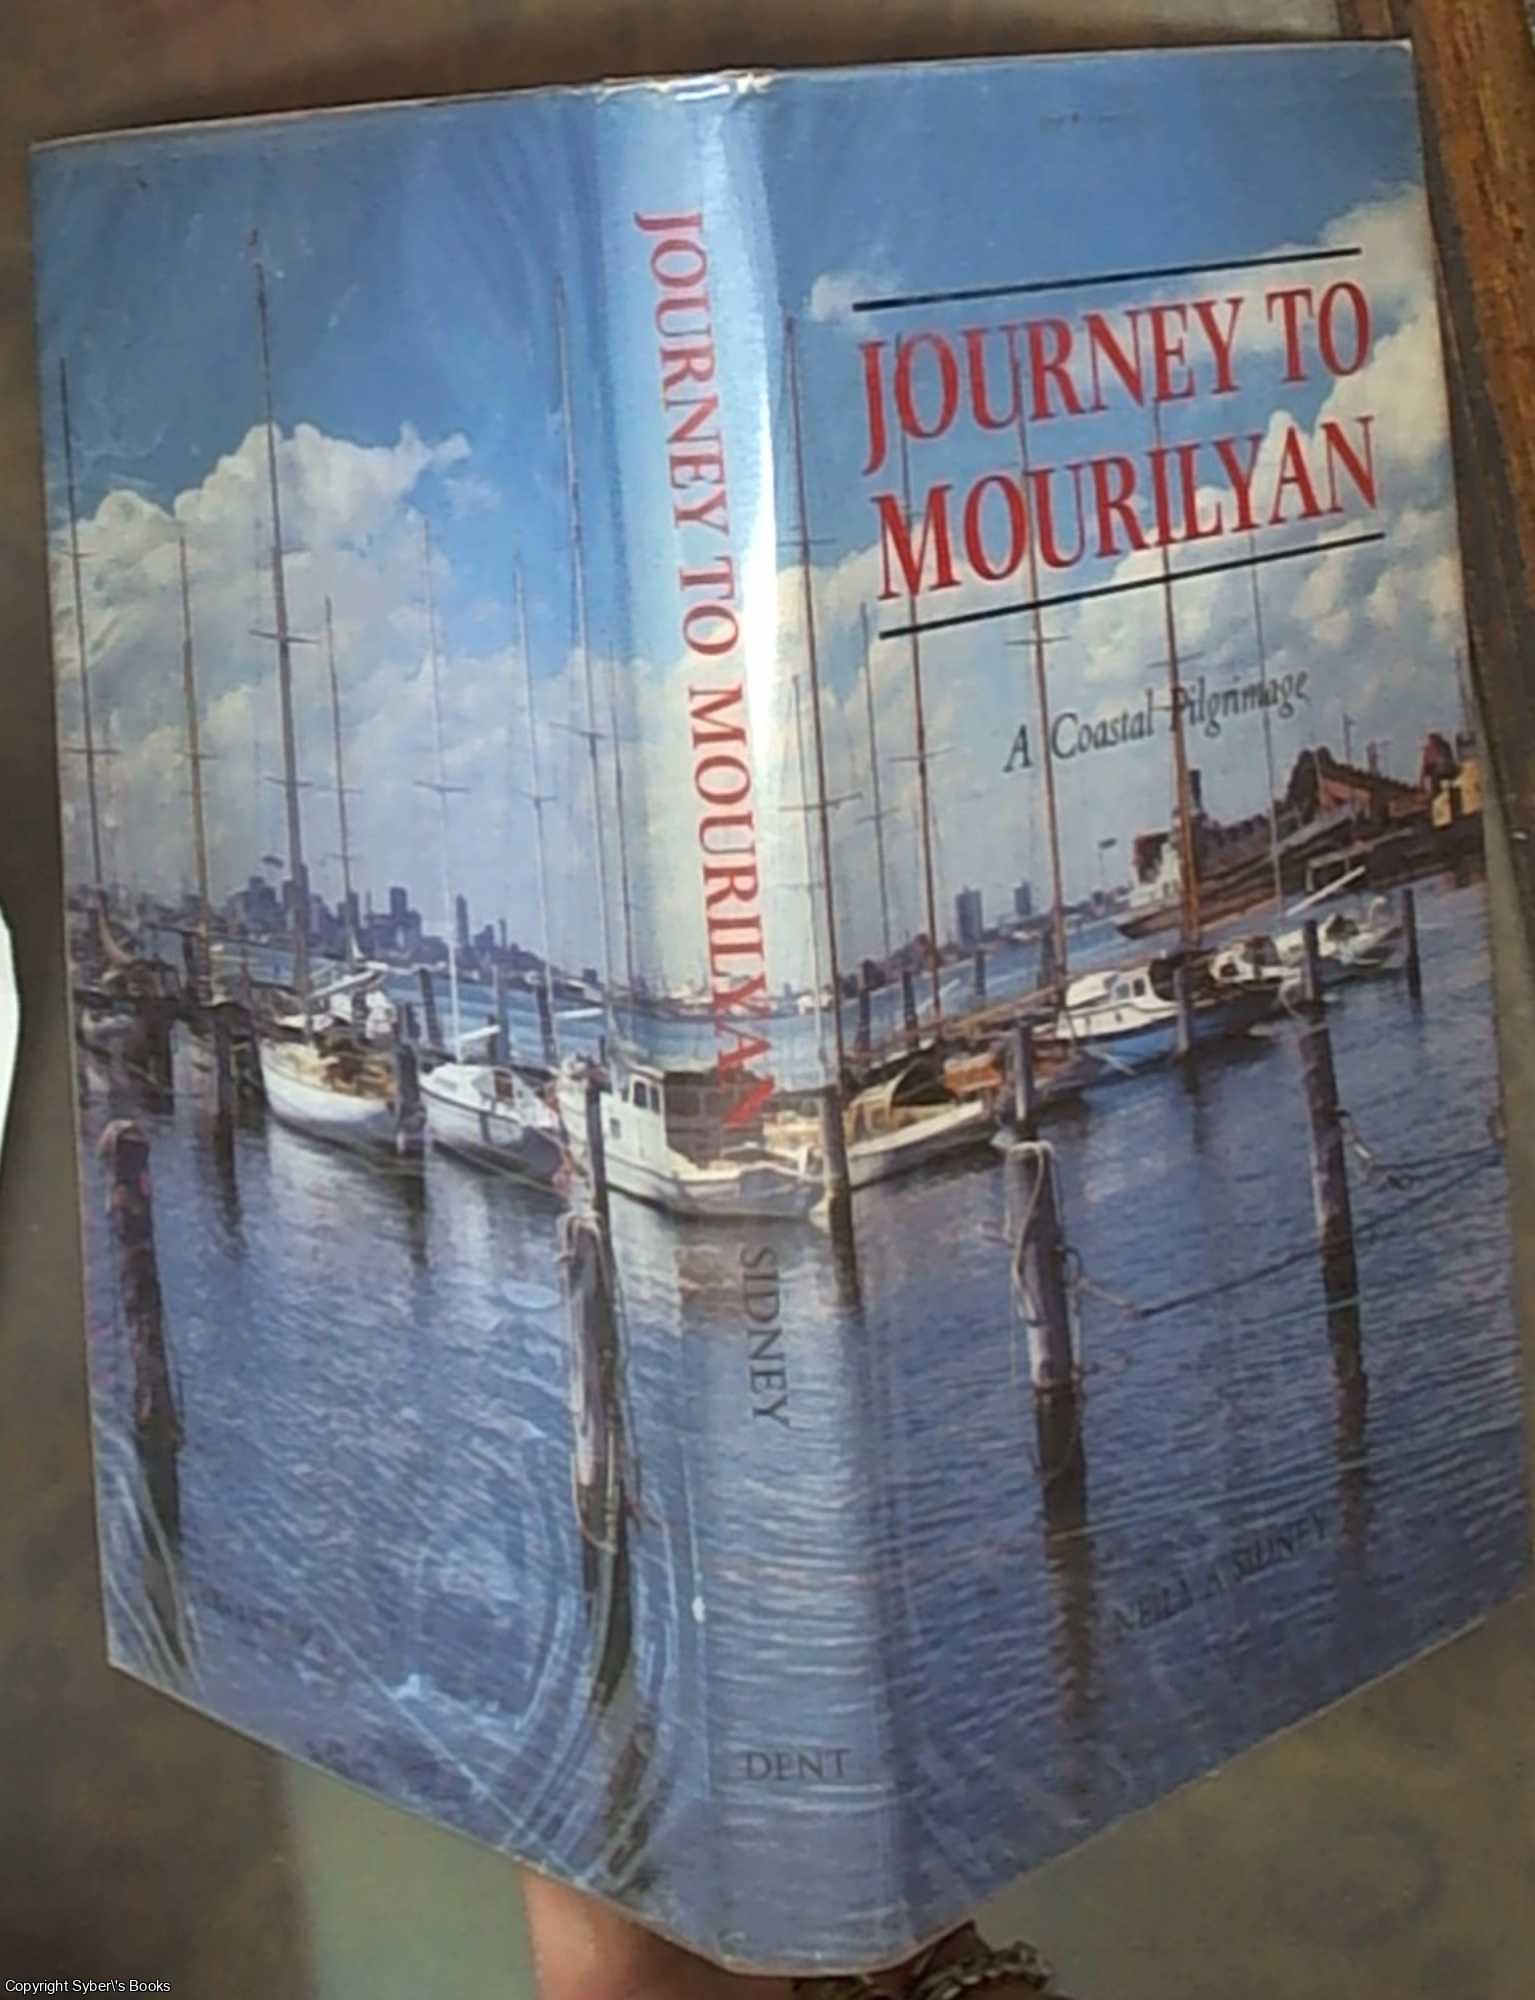 Sidney, Neilma - Journey to Mourilyan: A Coastal Pilgrimage